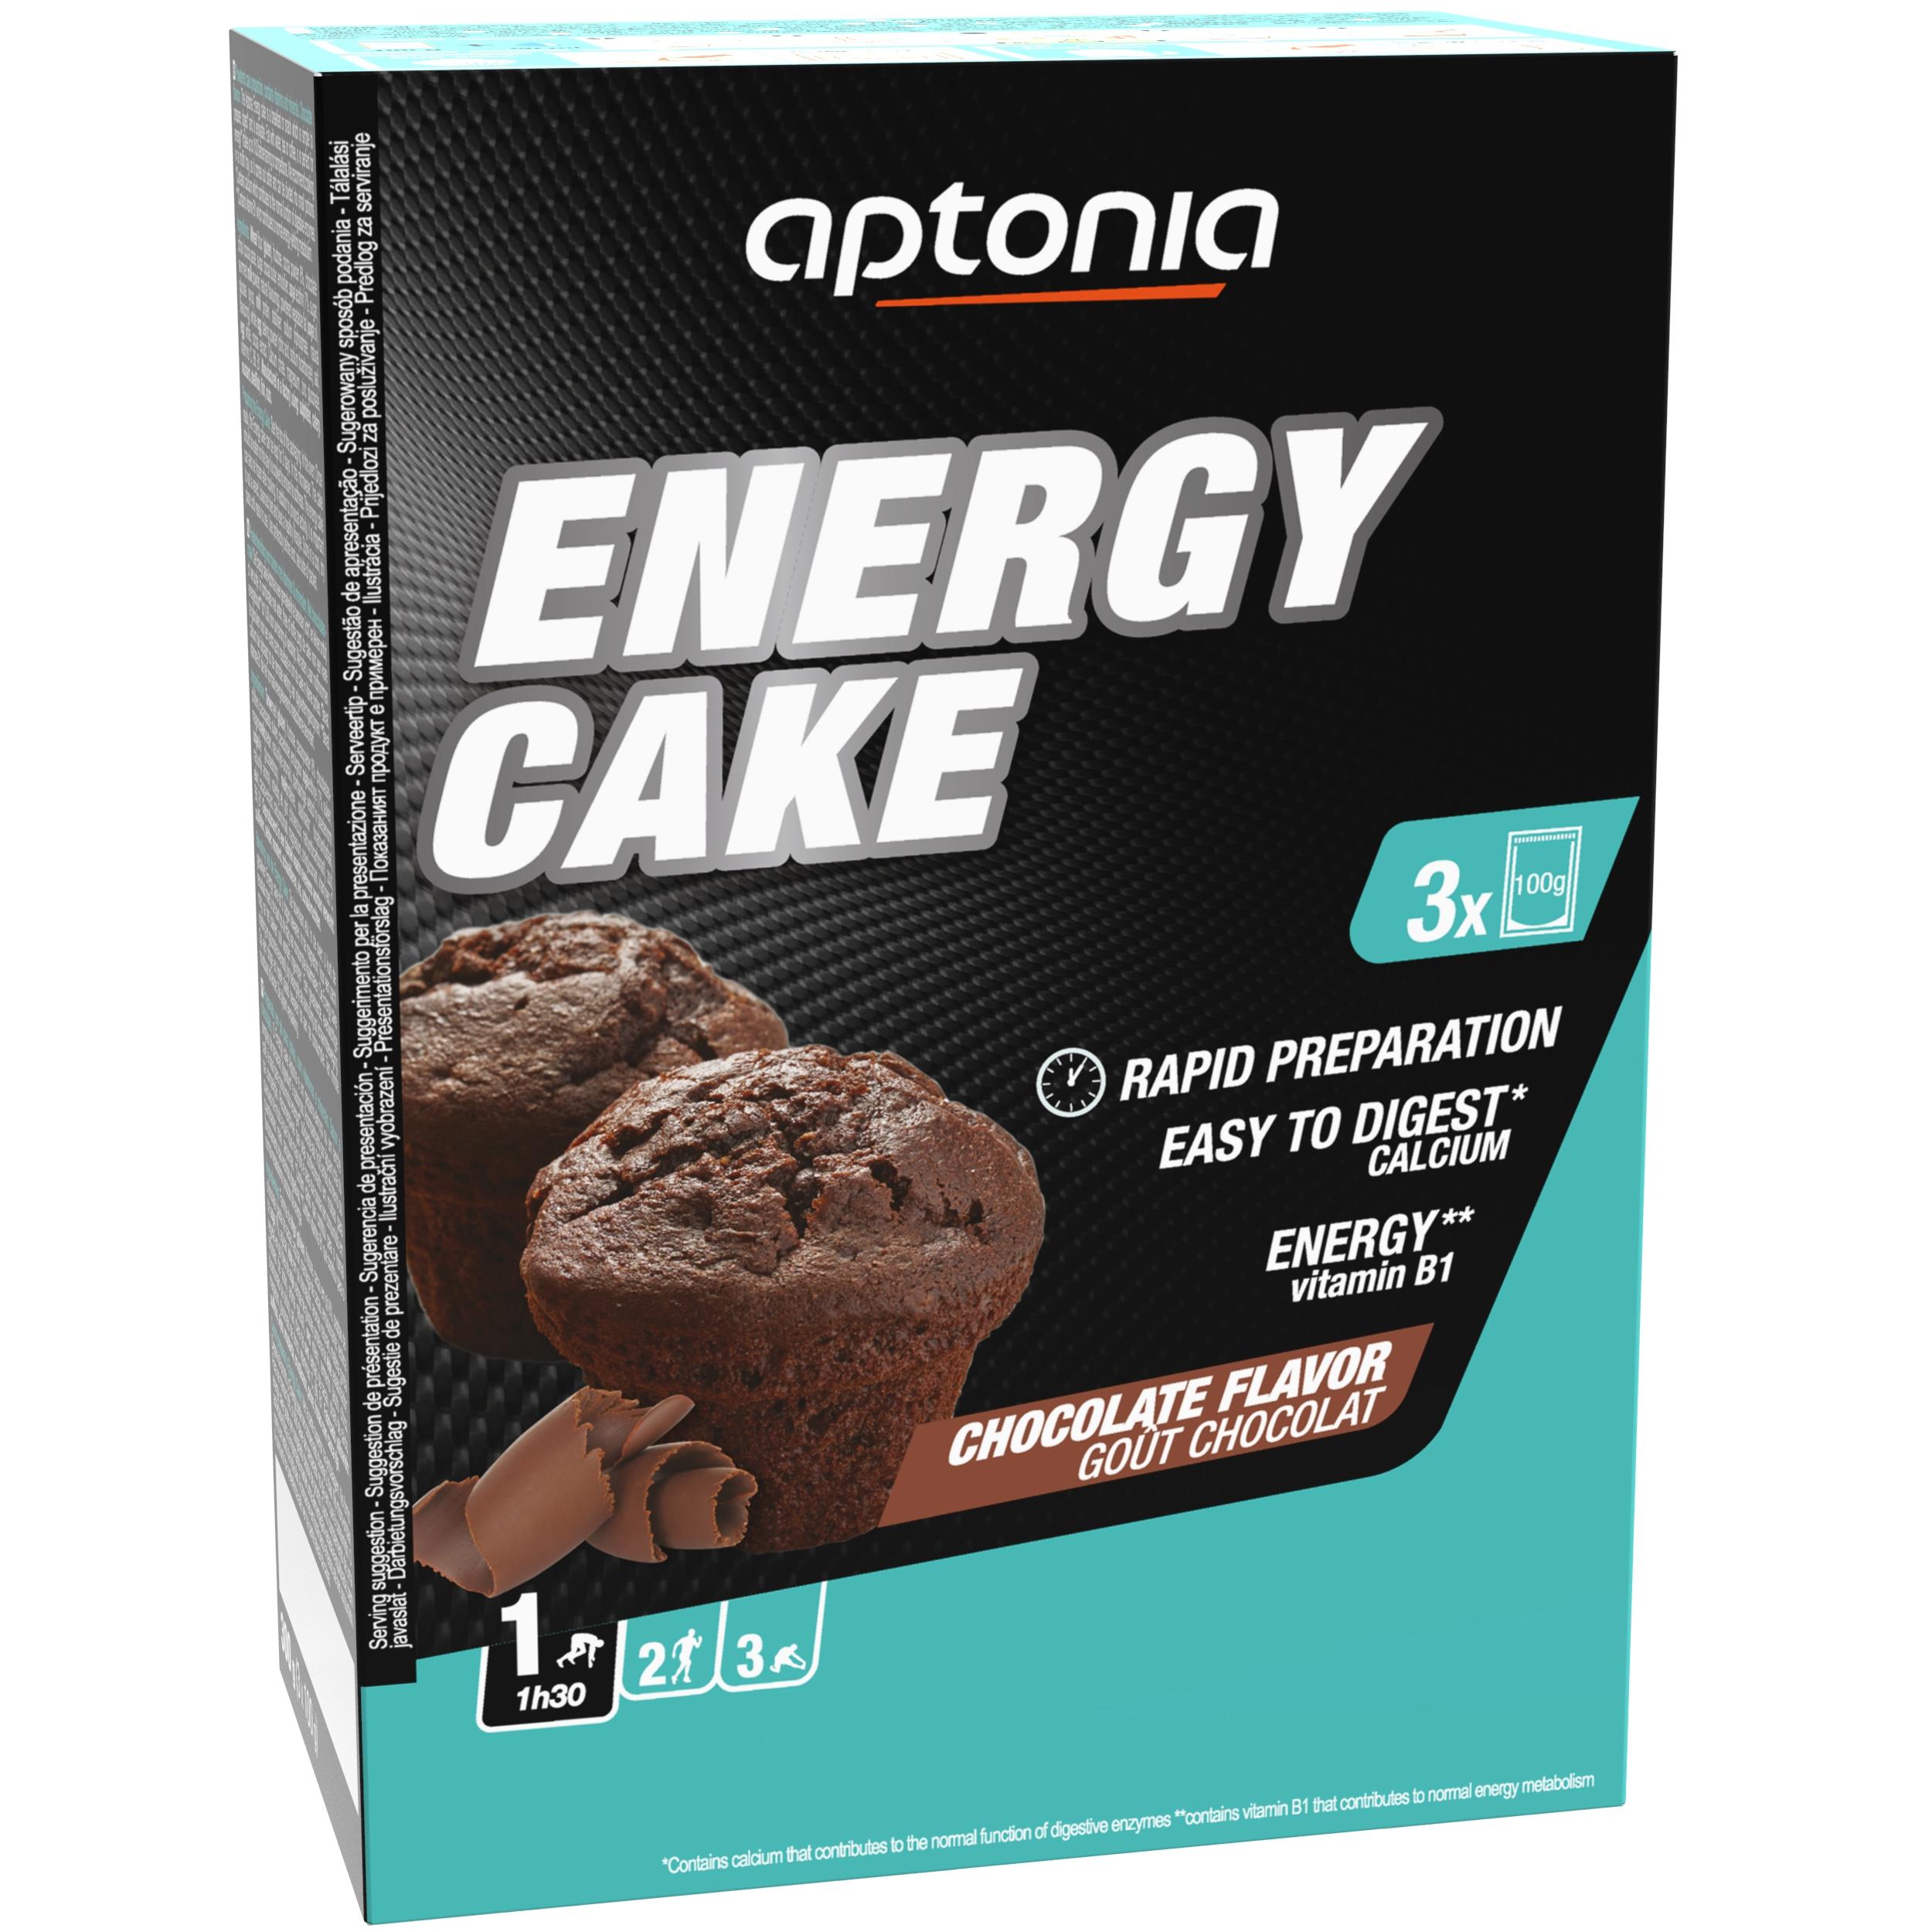 ENERGY CAKE 3X100 G - CHOCOLATE 1/3